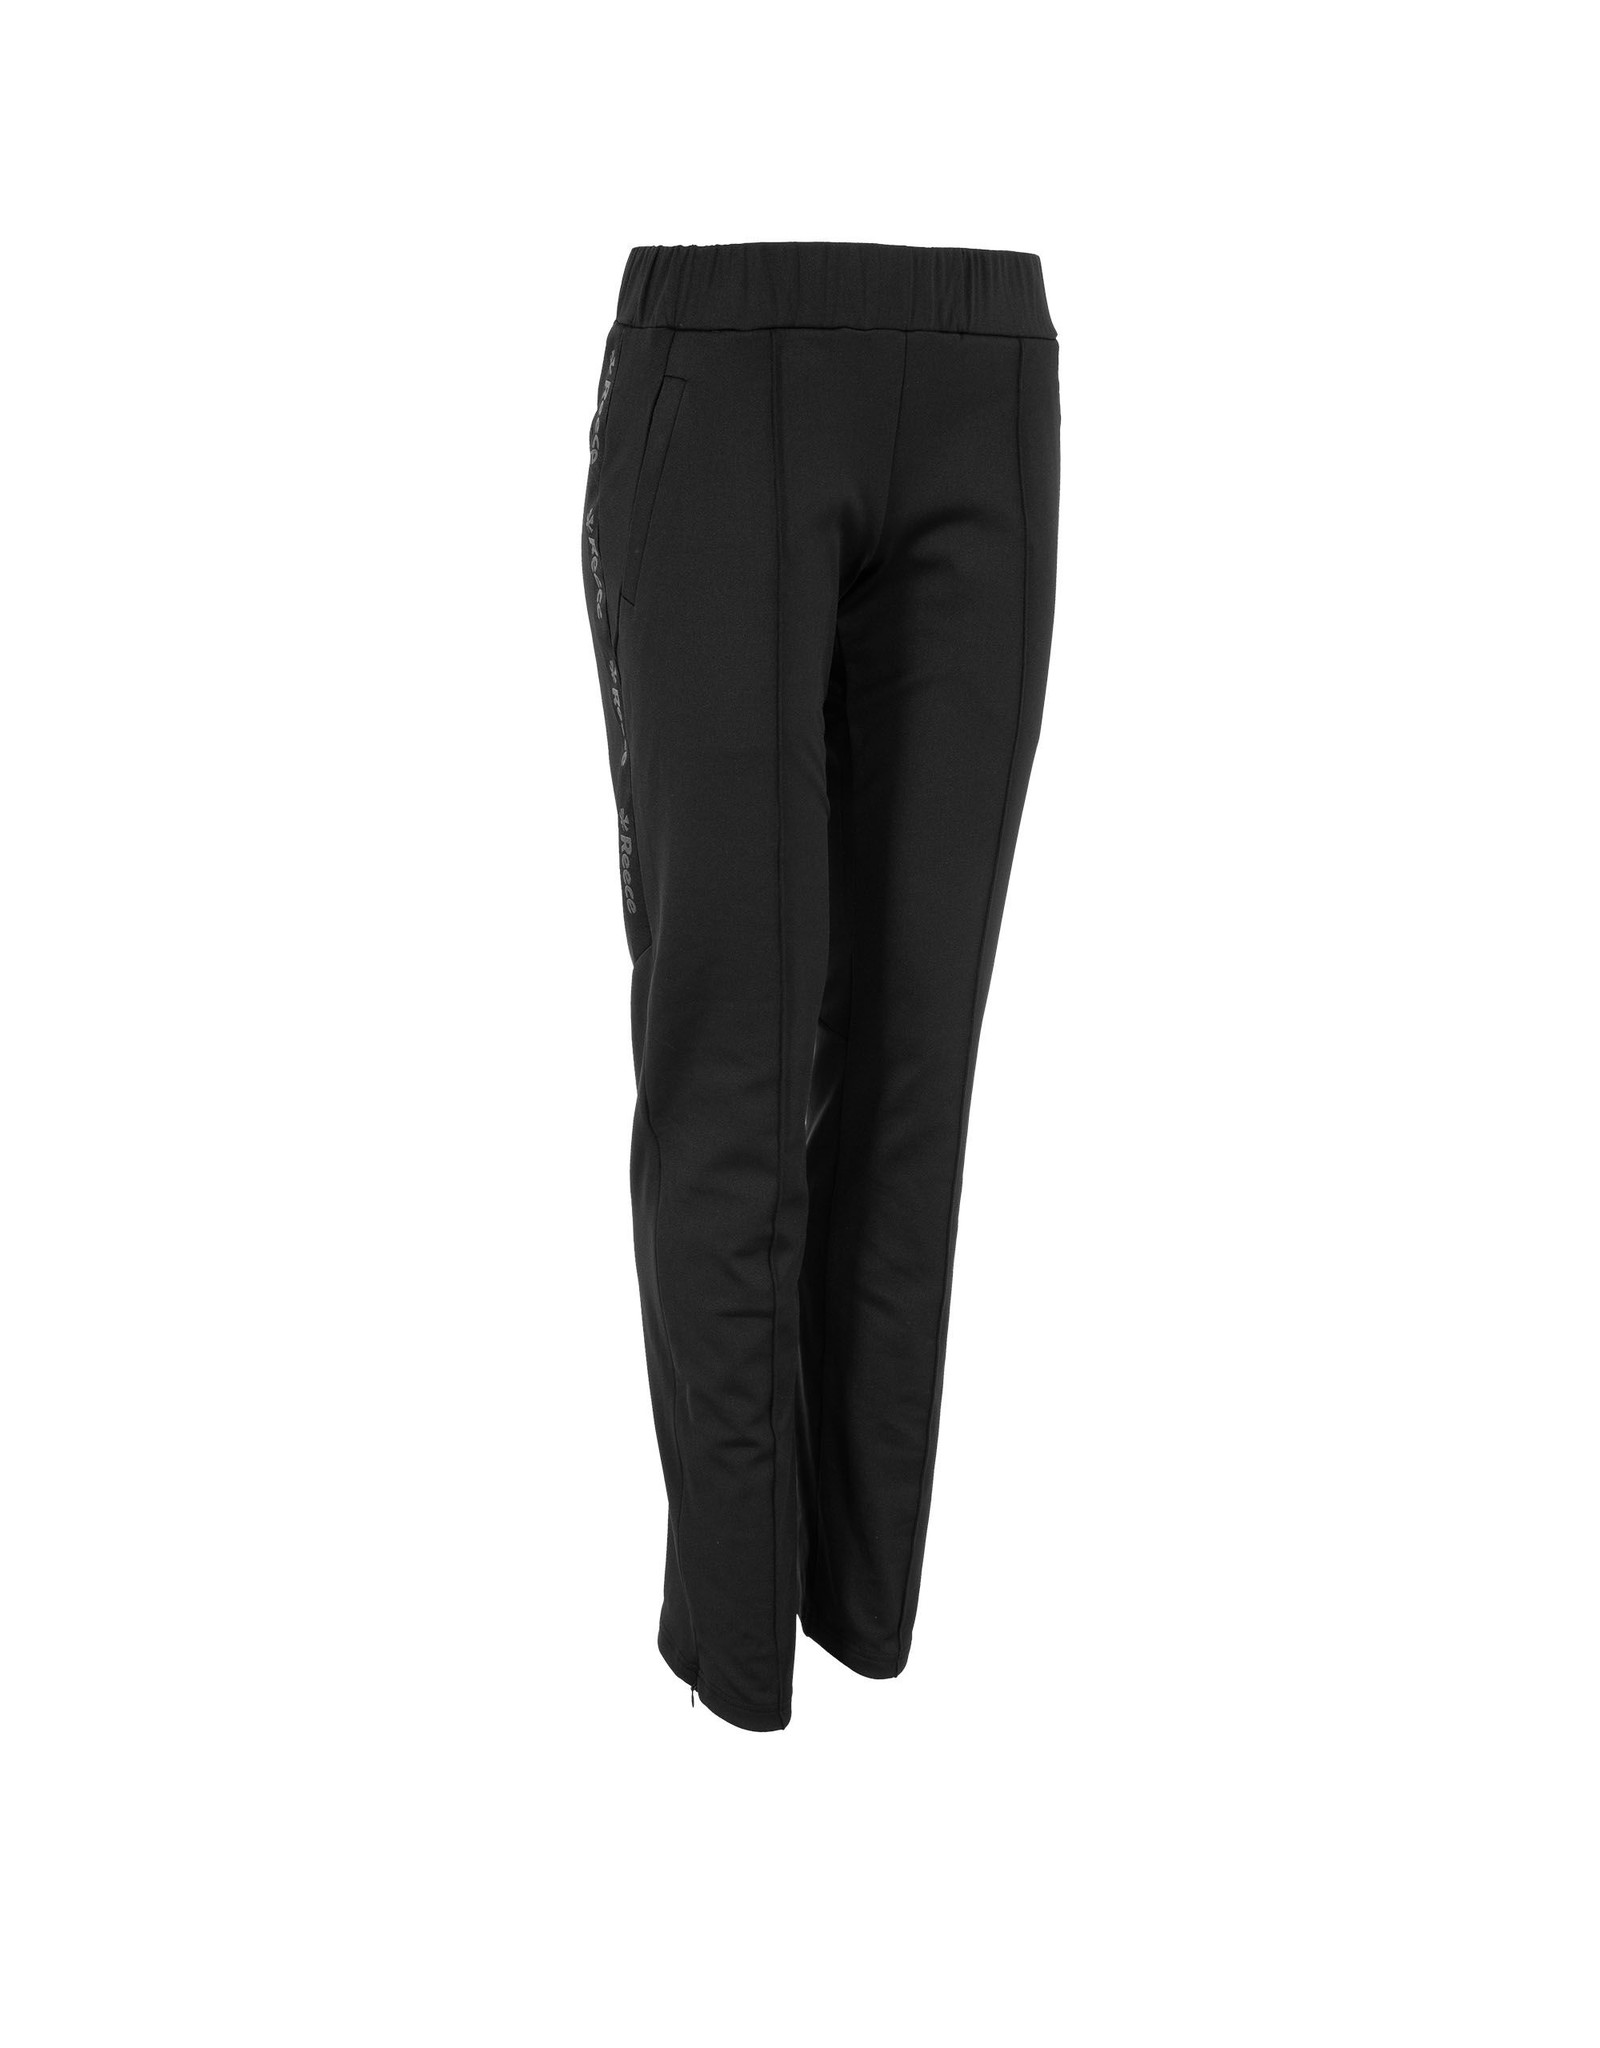 Reece Australia Cleve Stretched Fit Pants Ladies-Black